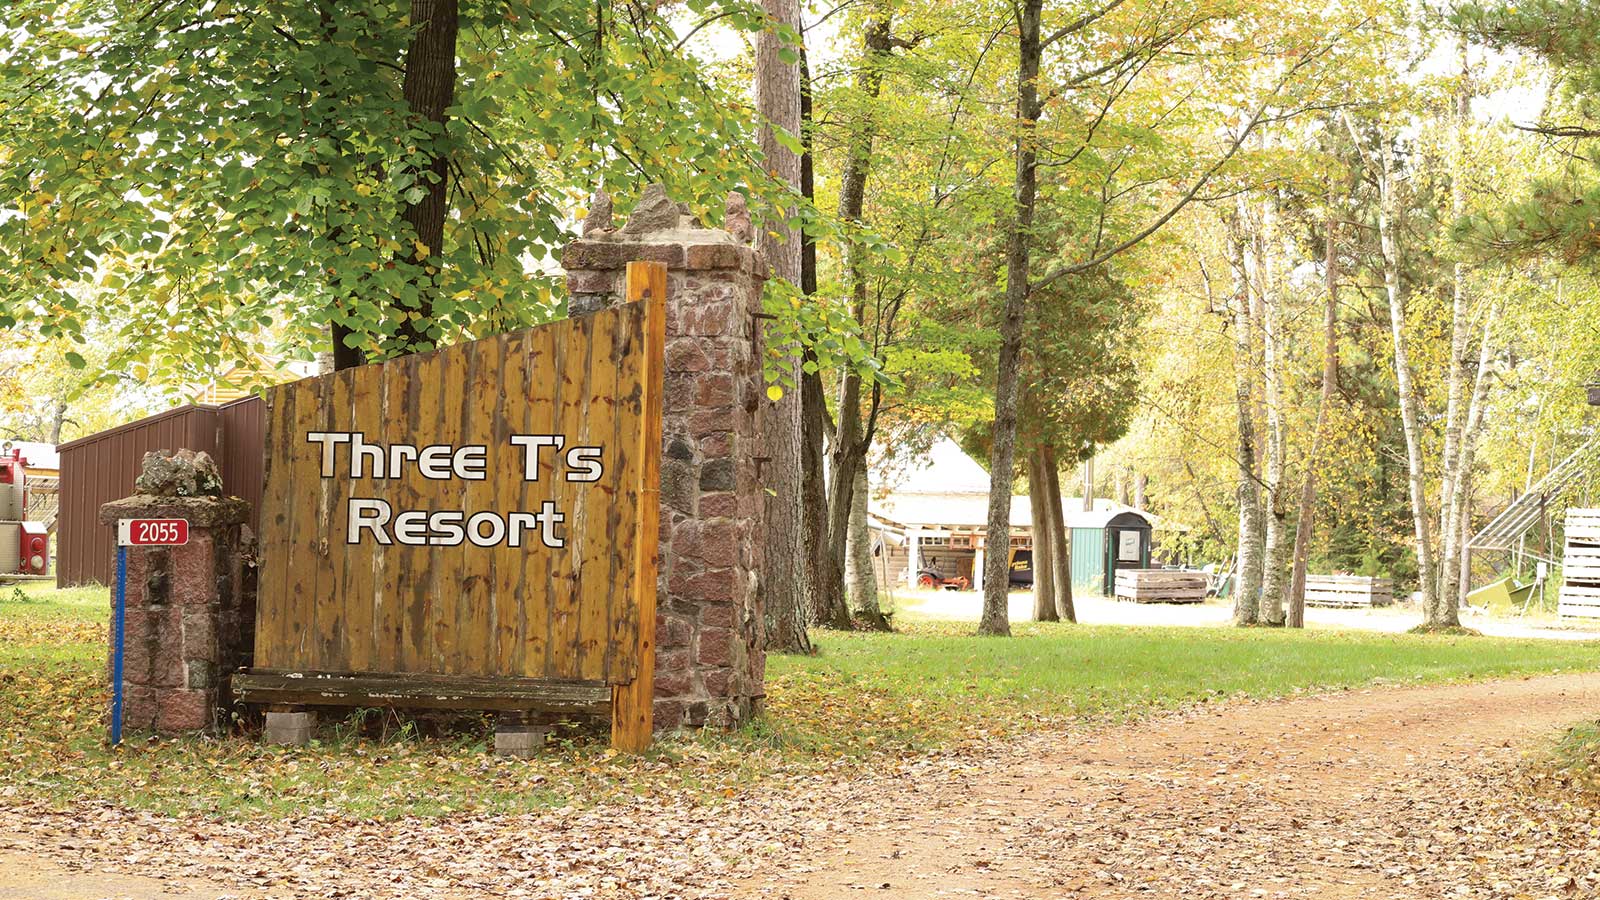 Three T's Resort entrance sign